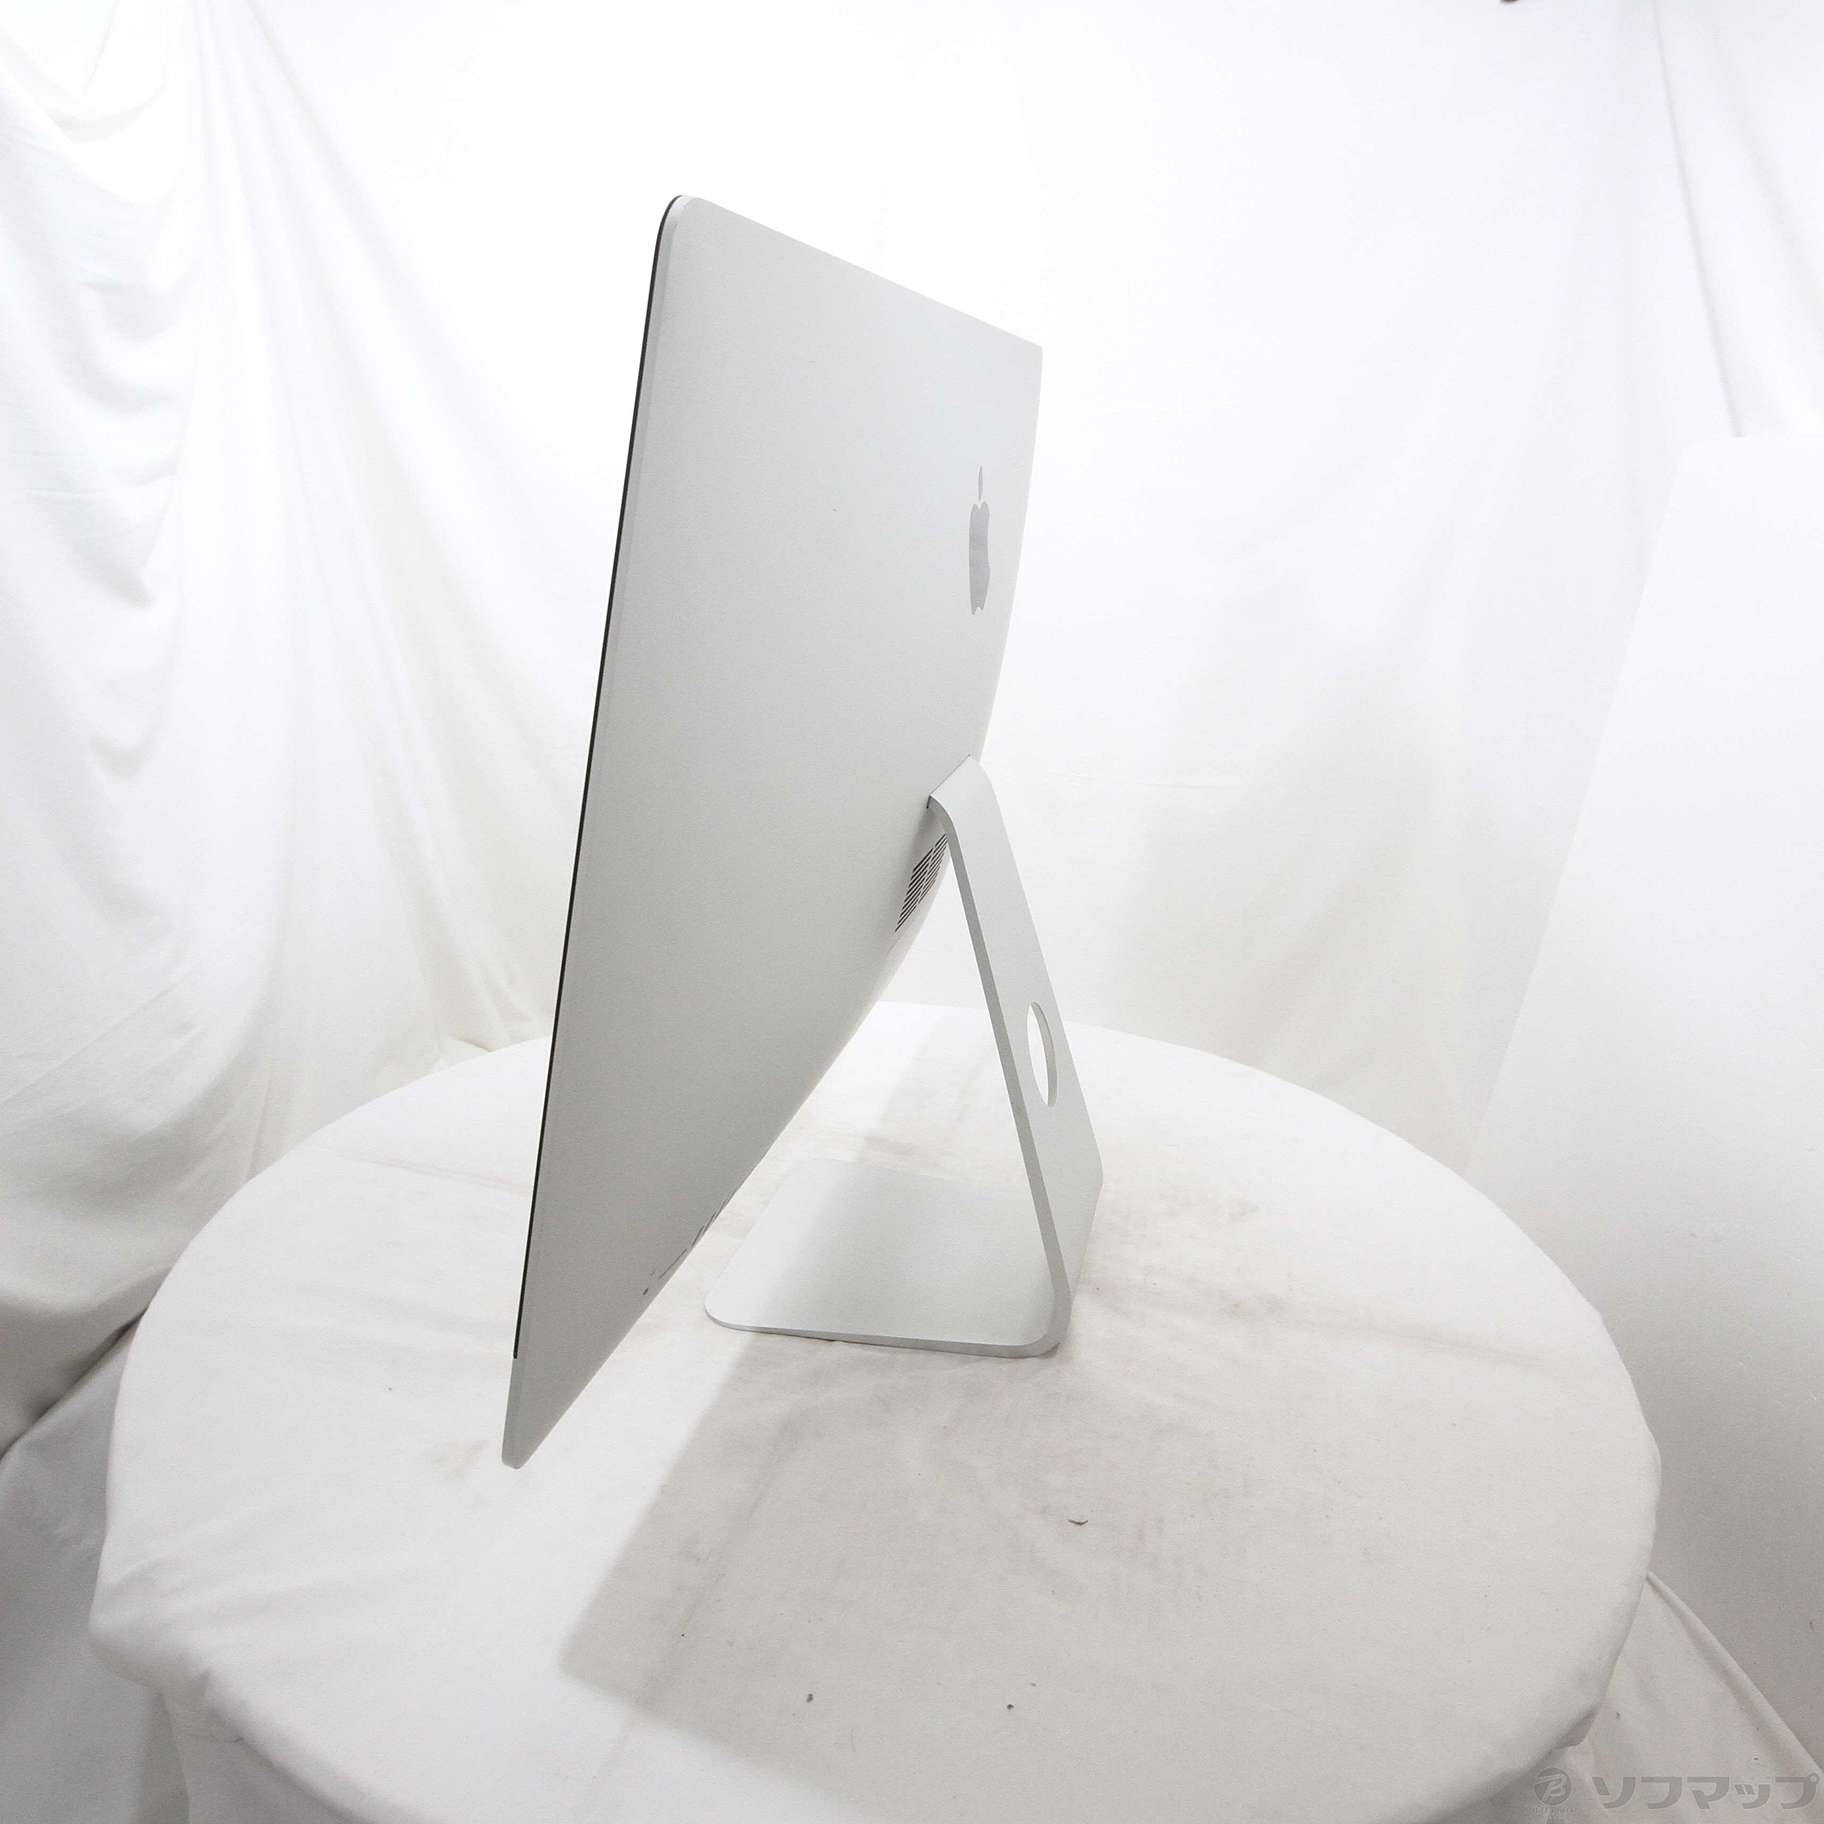 中古品〕 iMac 27-inch Late 2012 MD096J／A Core_i7 3.4GHz 32GB ...